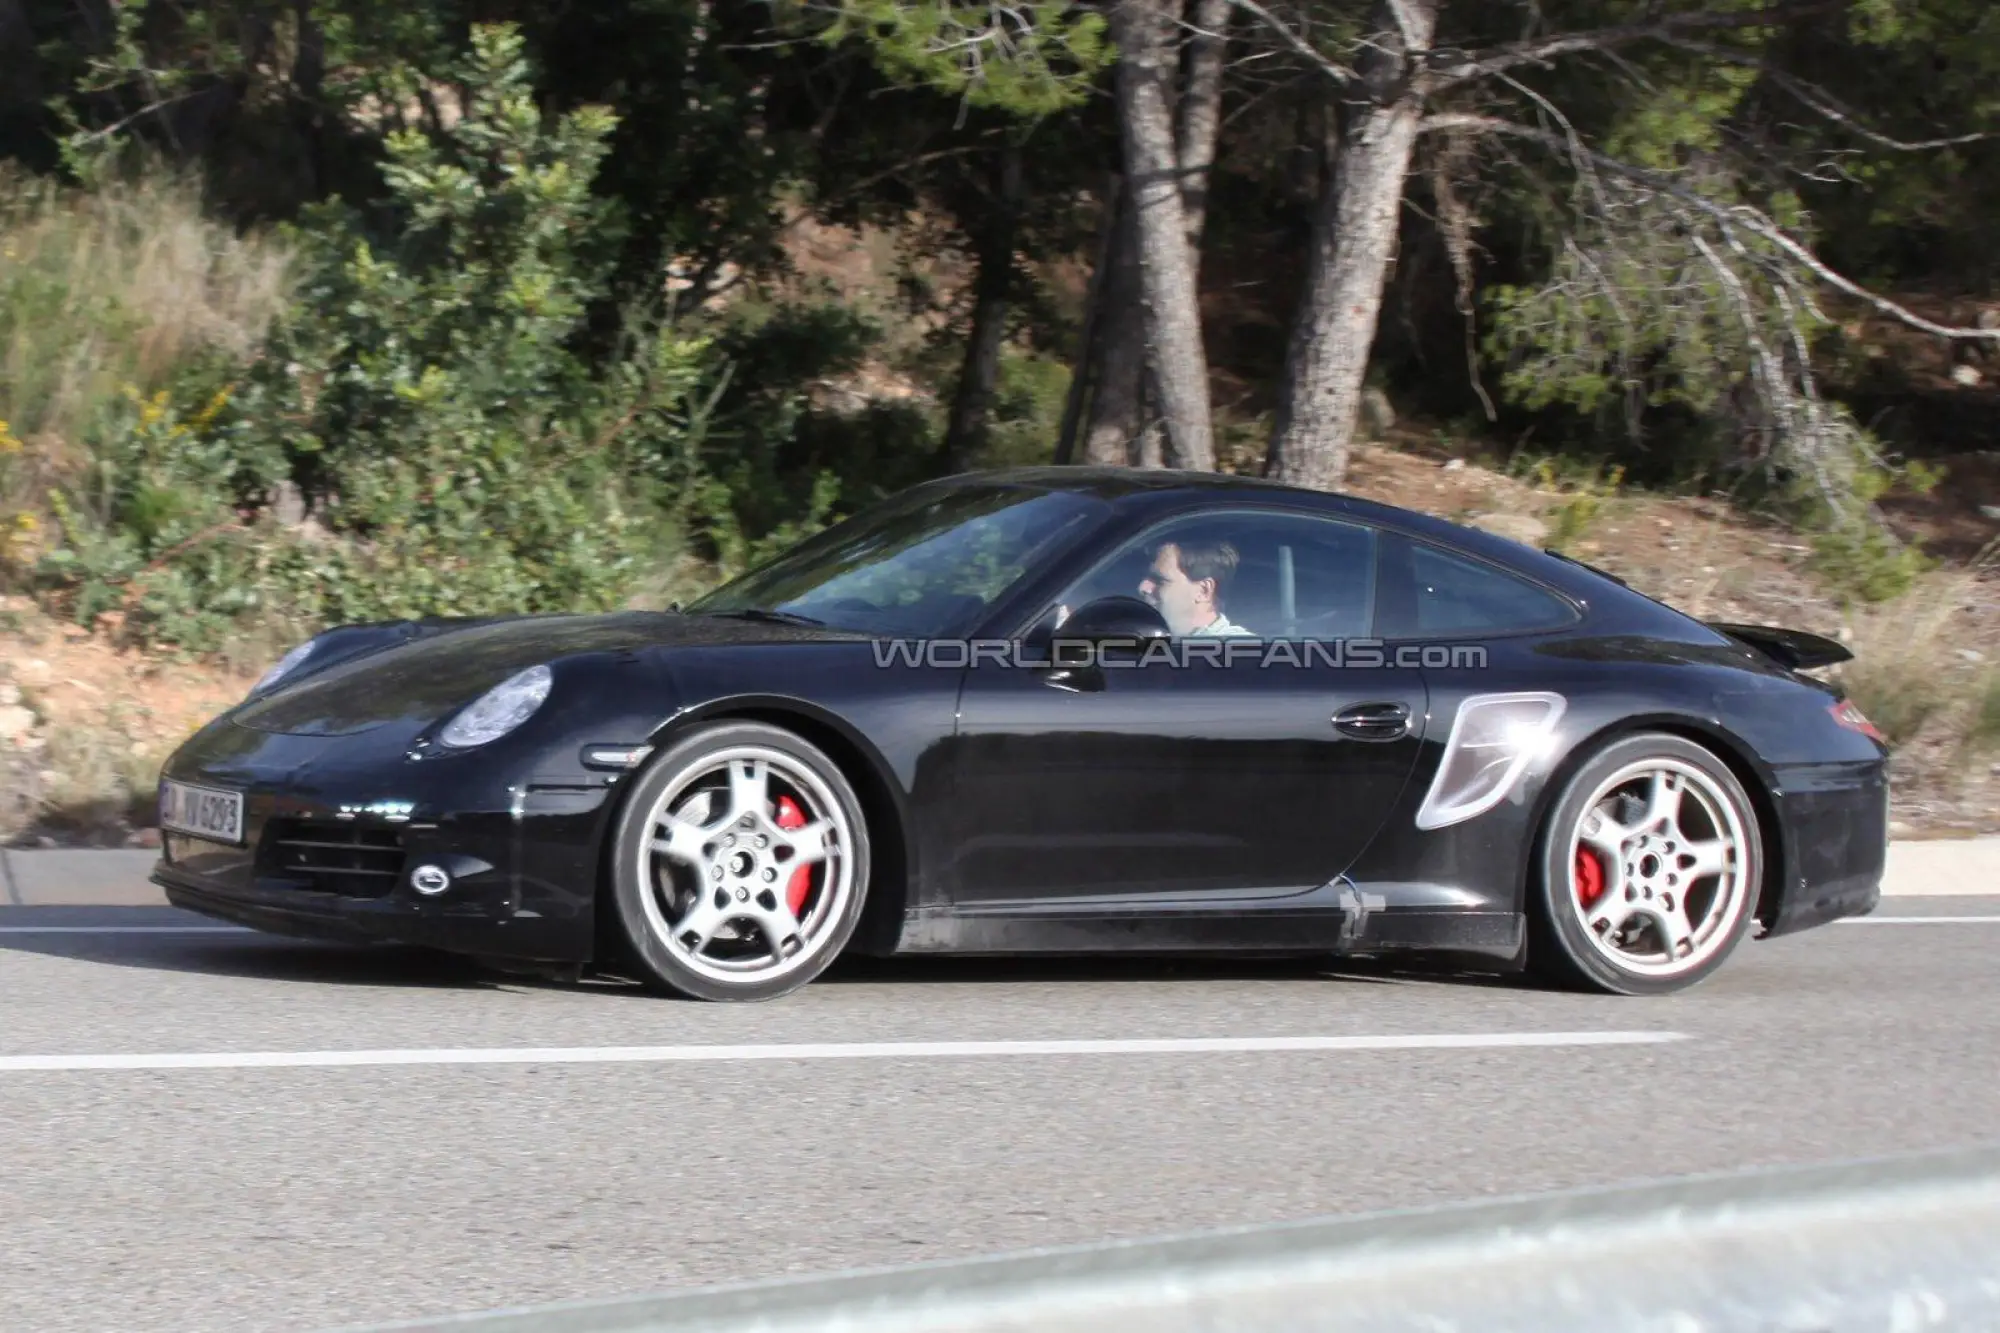 Porsche 911 2012 - Foto spia 02-12-2010 - 1